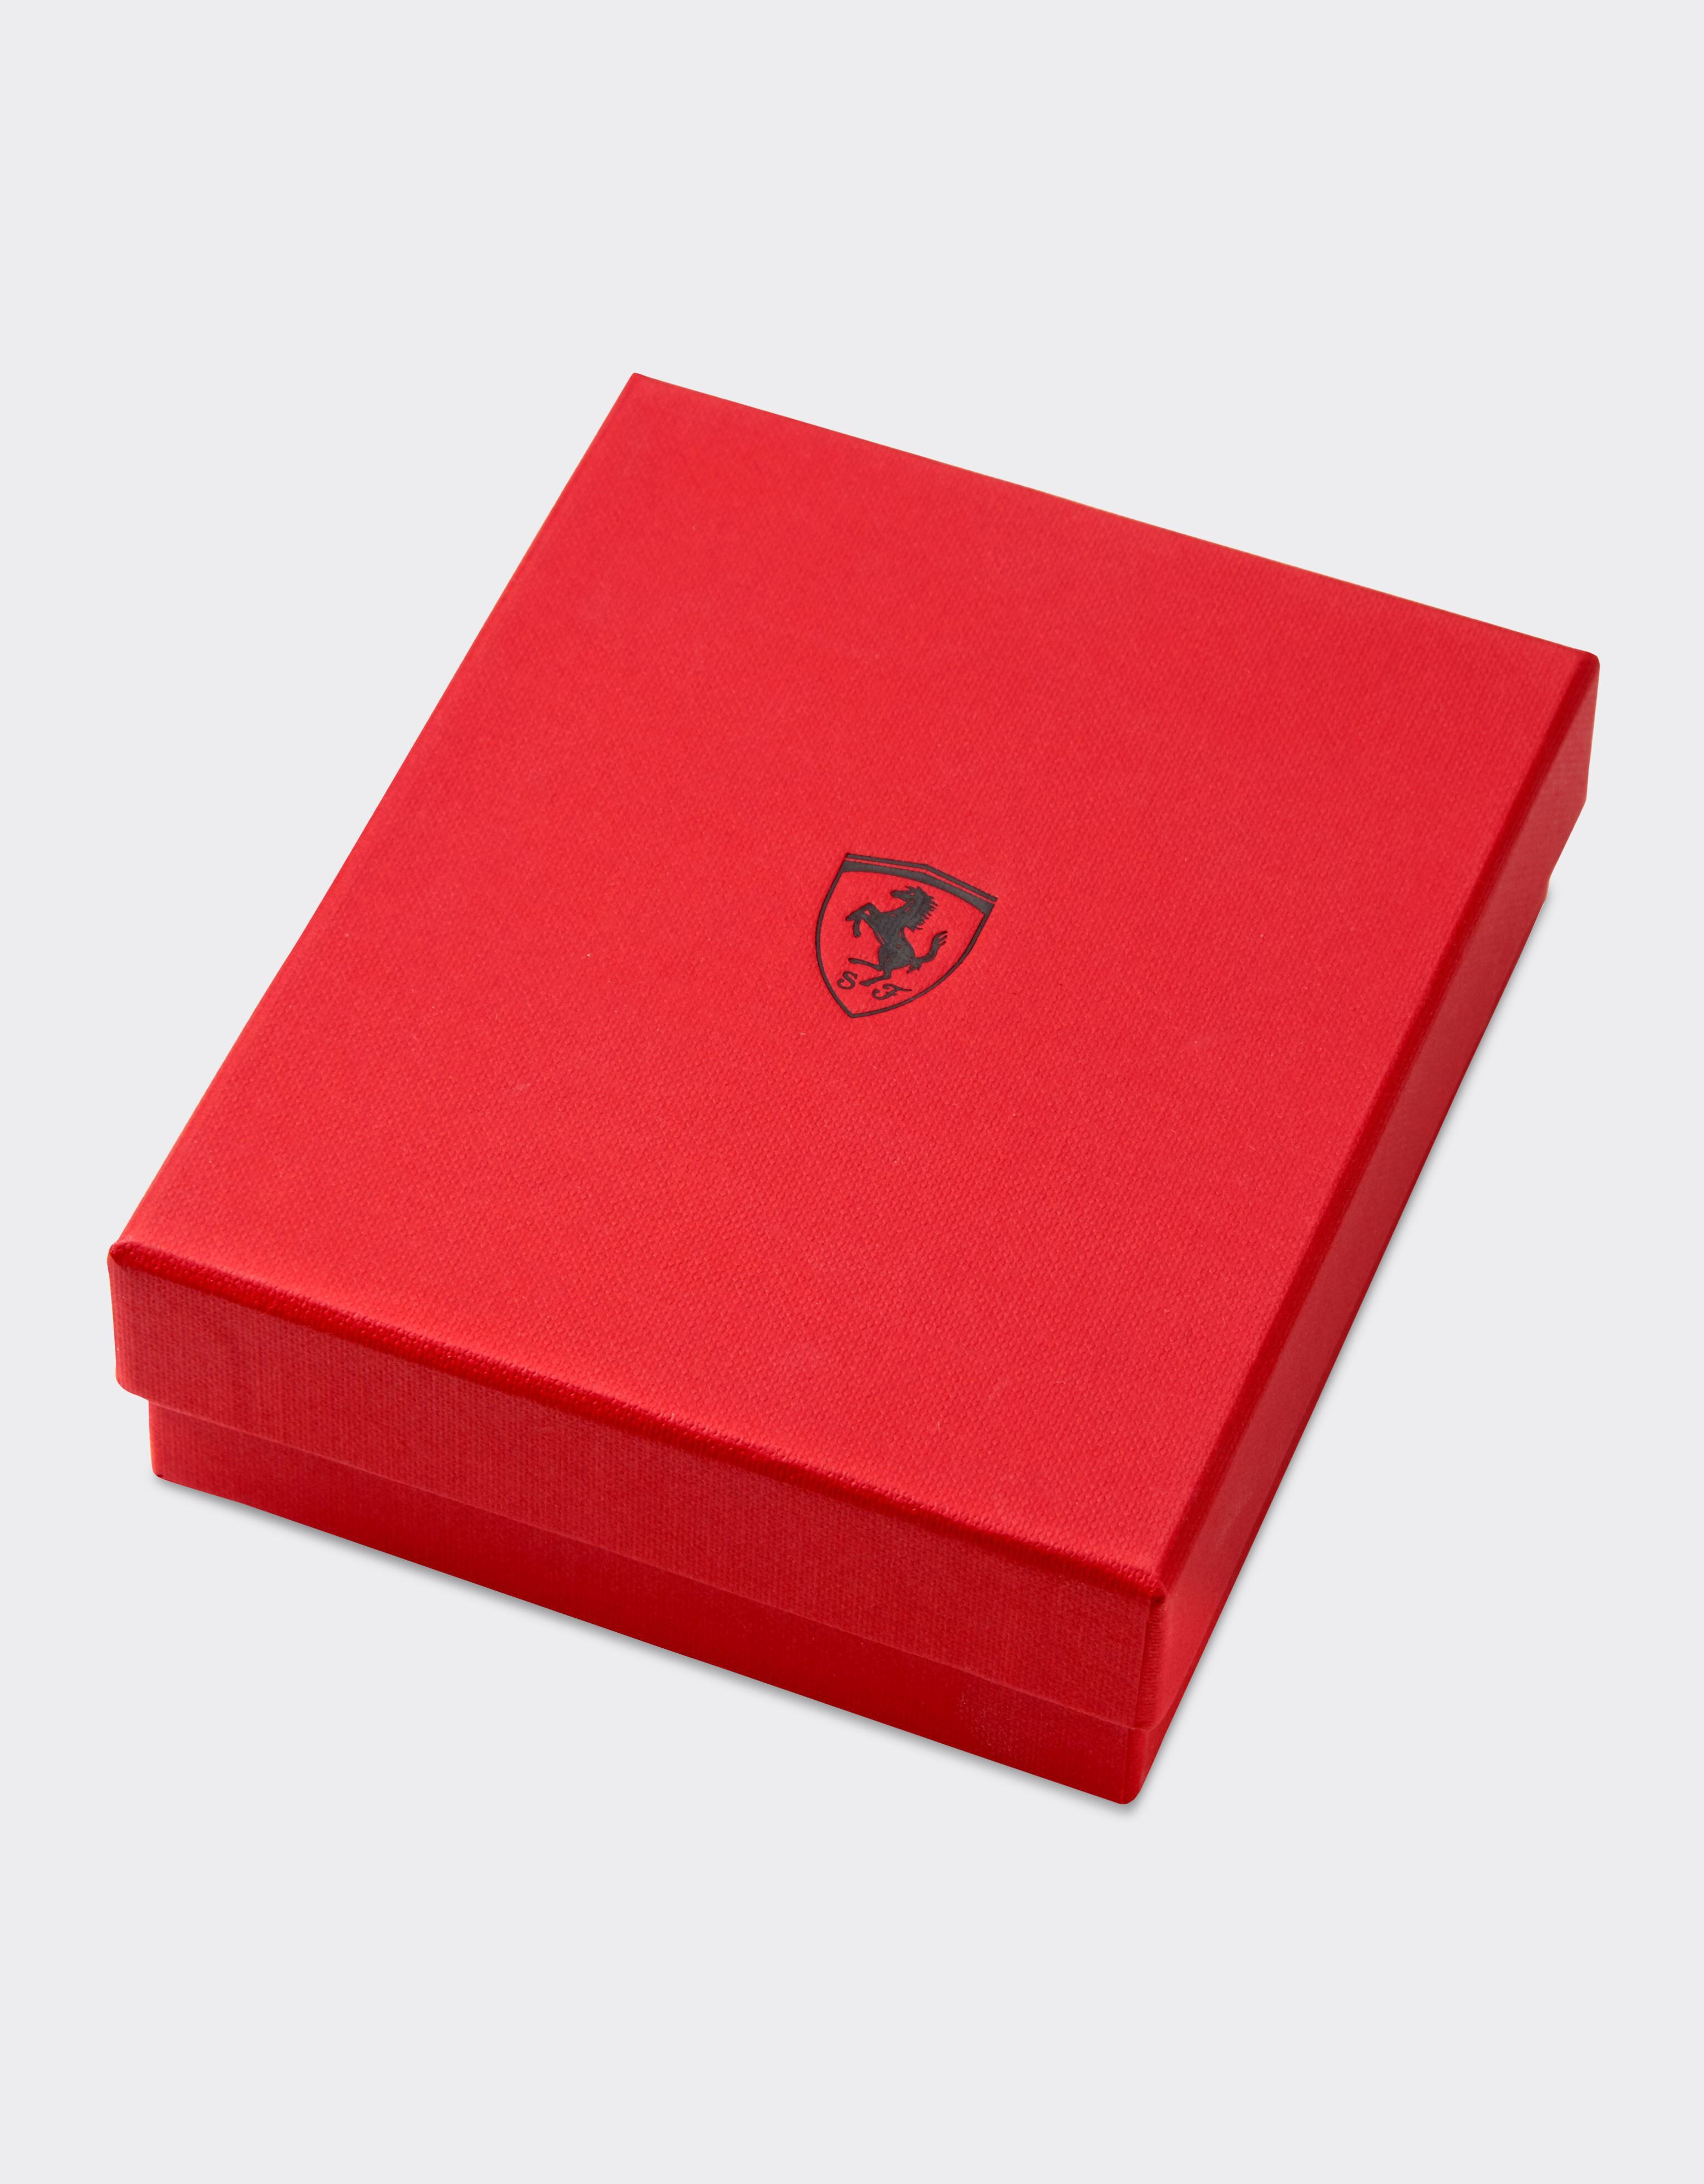 Ferrari Objet déco Second Life avec Scudetto émaillé Made in Italy Jaune 47306f